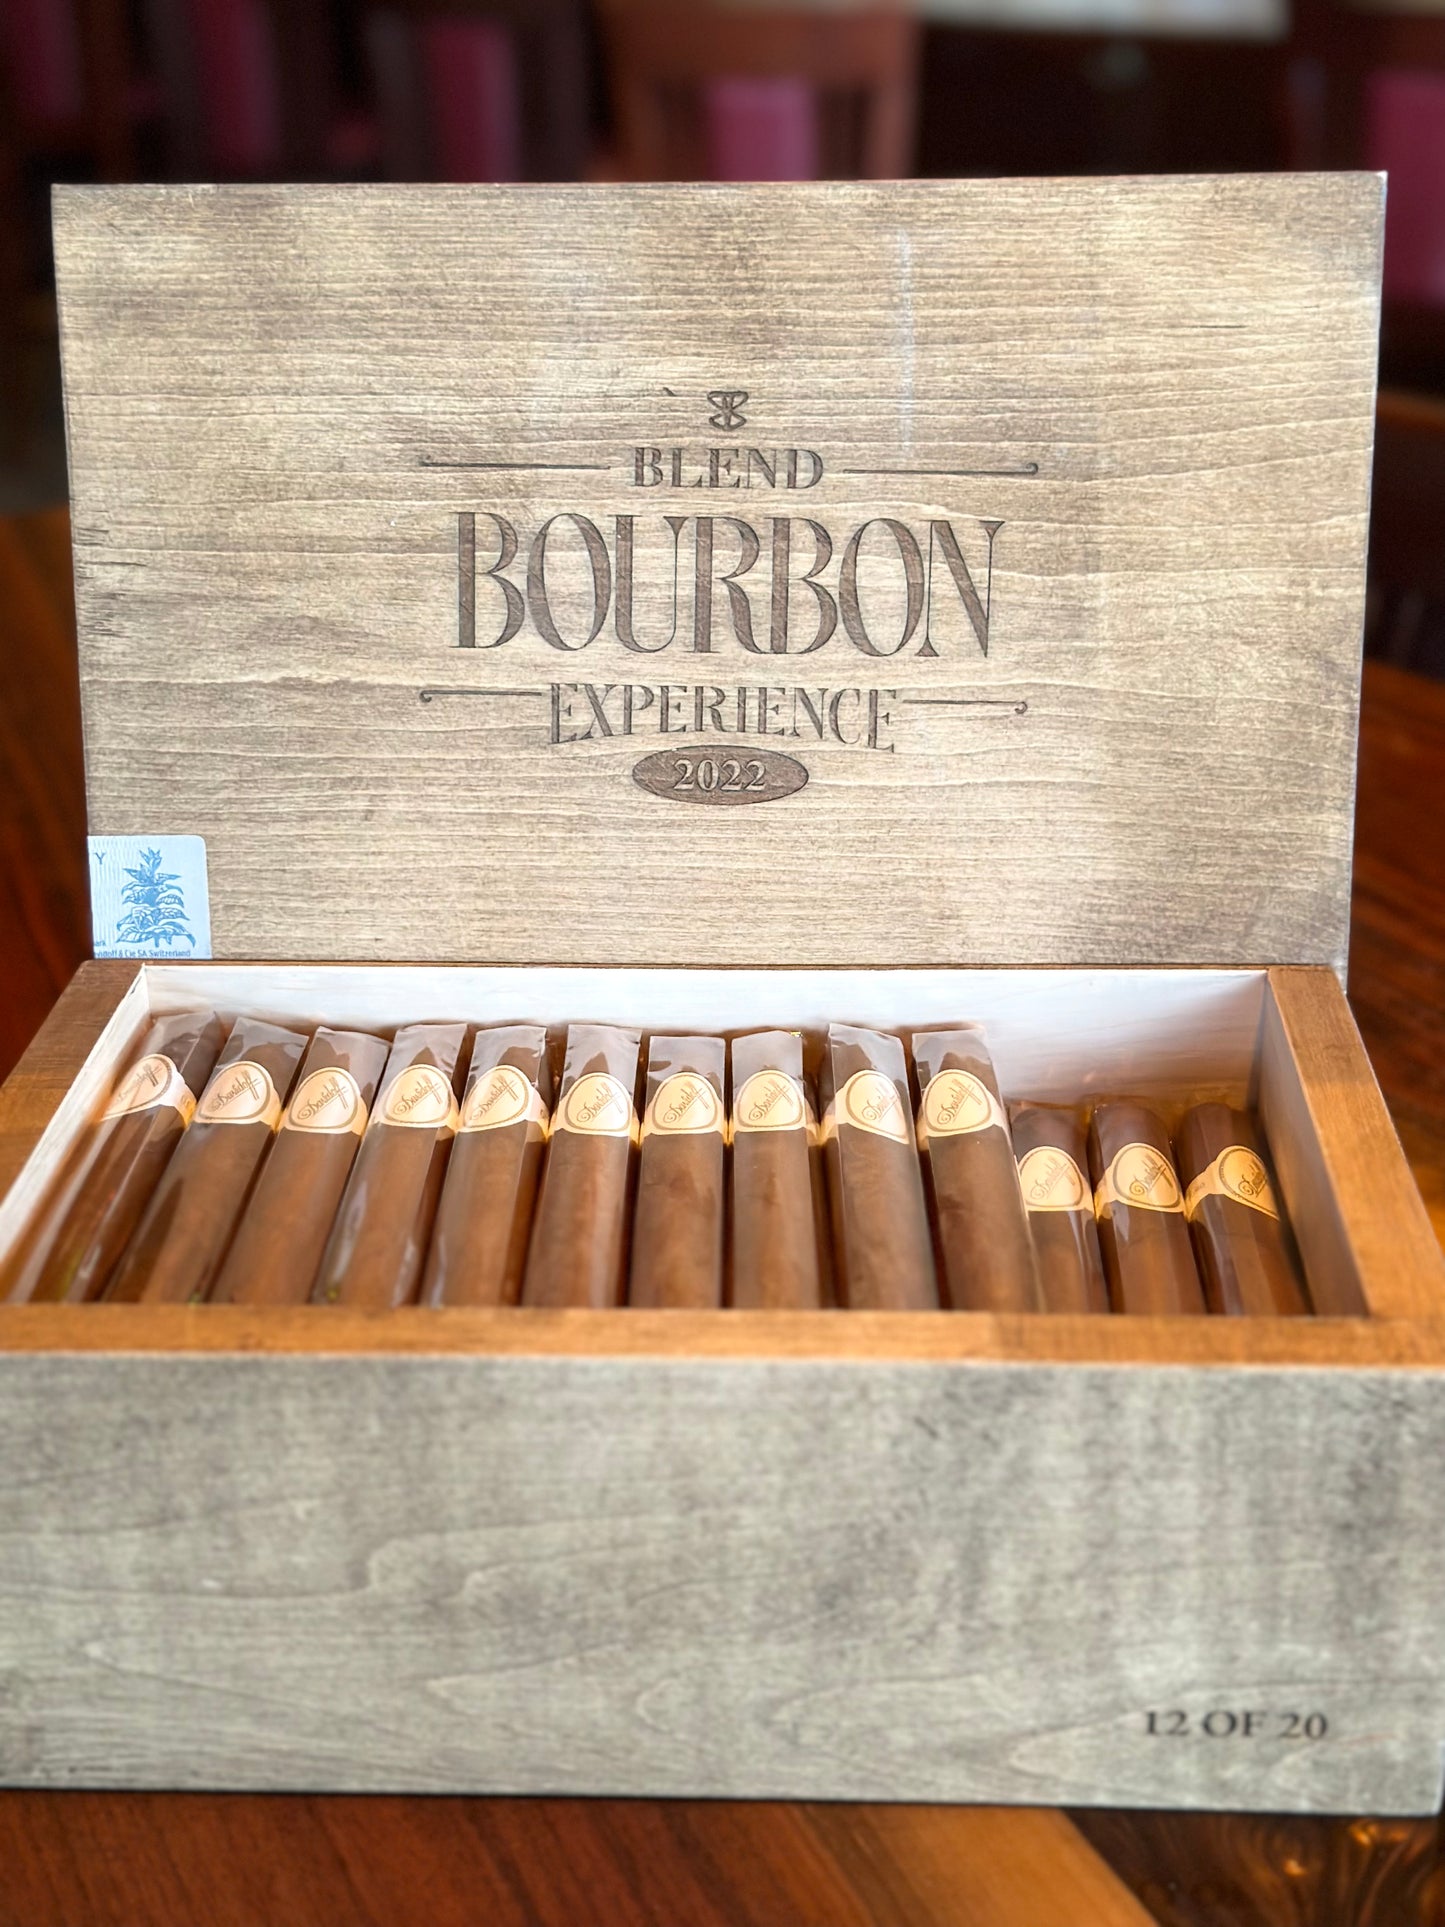 Davidoff Blend Bourbon Experience 2022 Exclusive